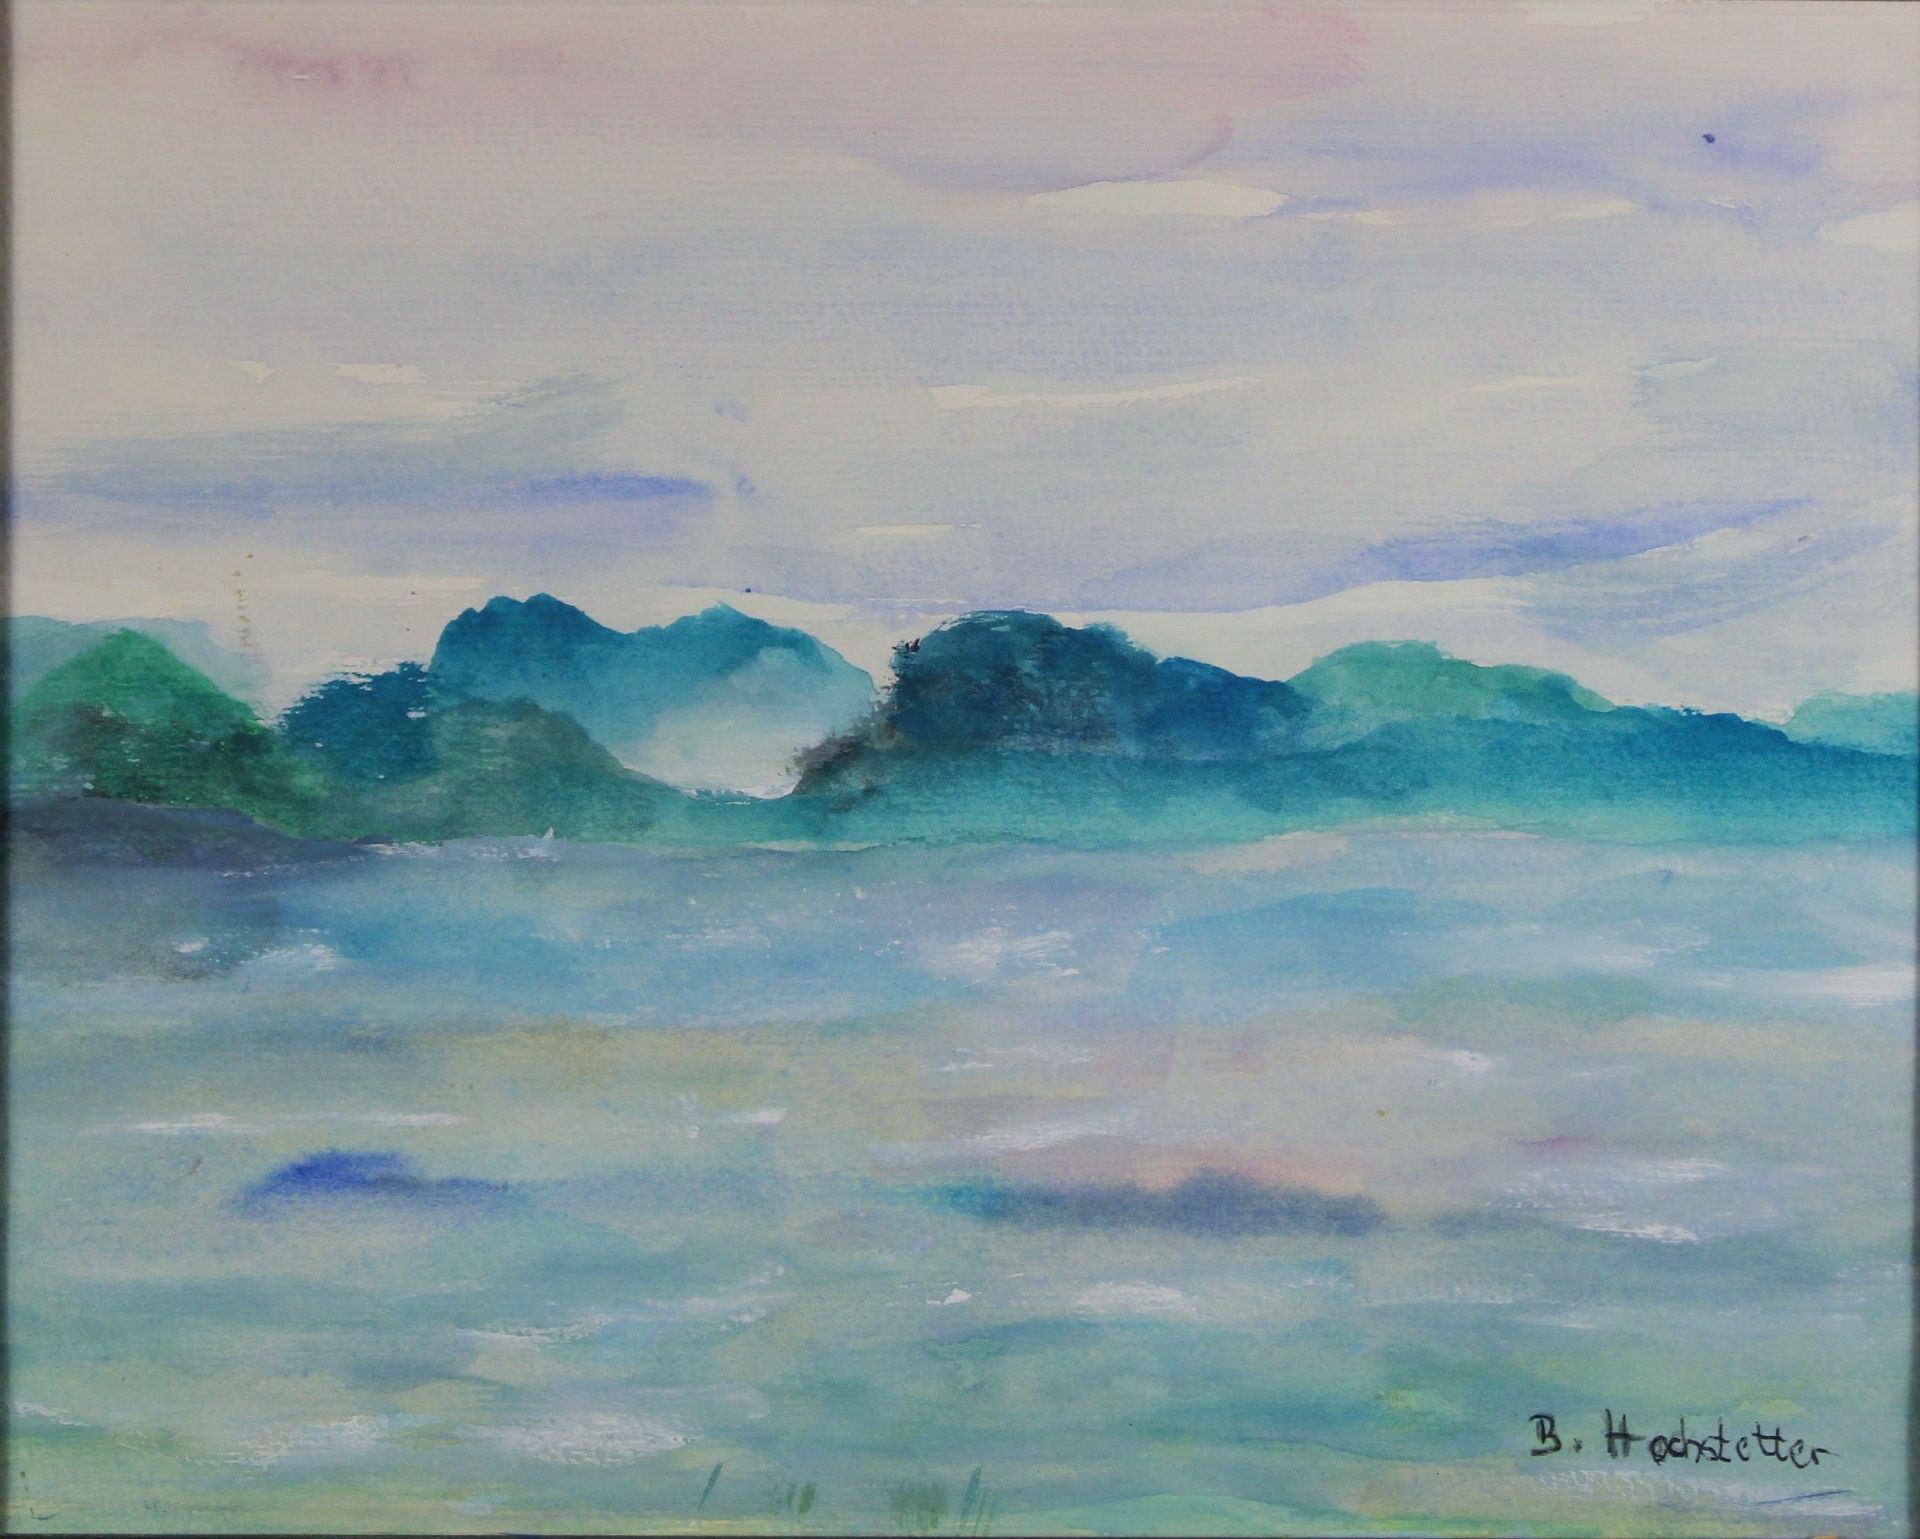 B. Hochstetter, See und Wellen, Aquarell, unten rechts signiert, Lichtmaß: 23 x 29 cm, Rahmen: 26 x